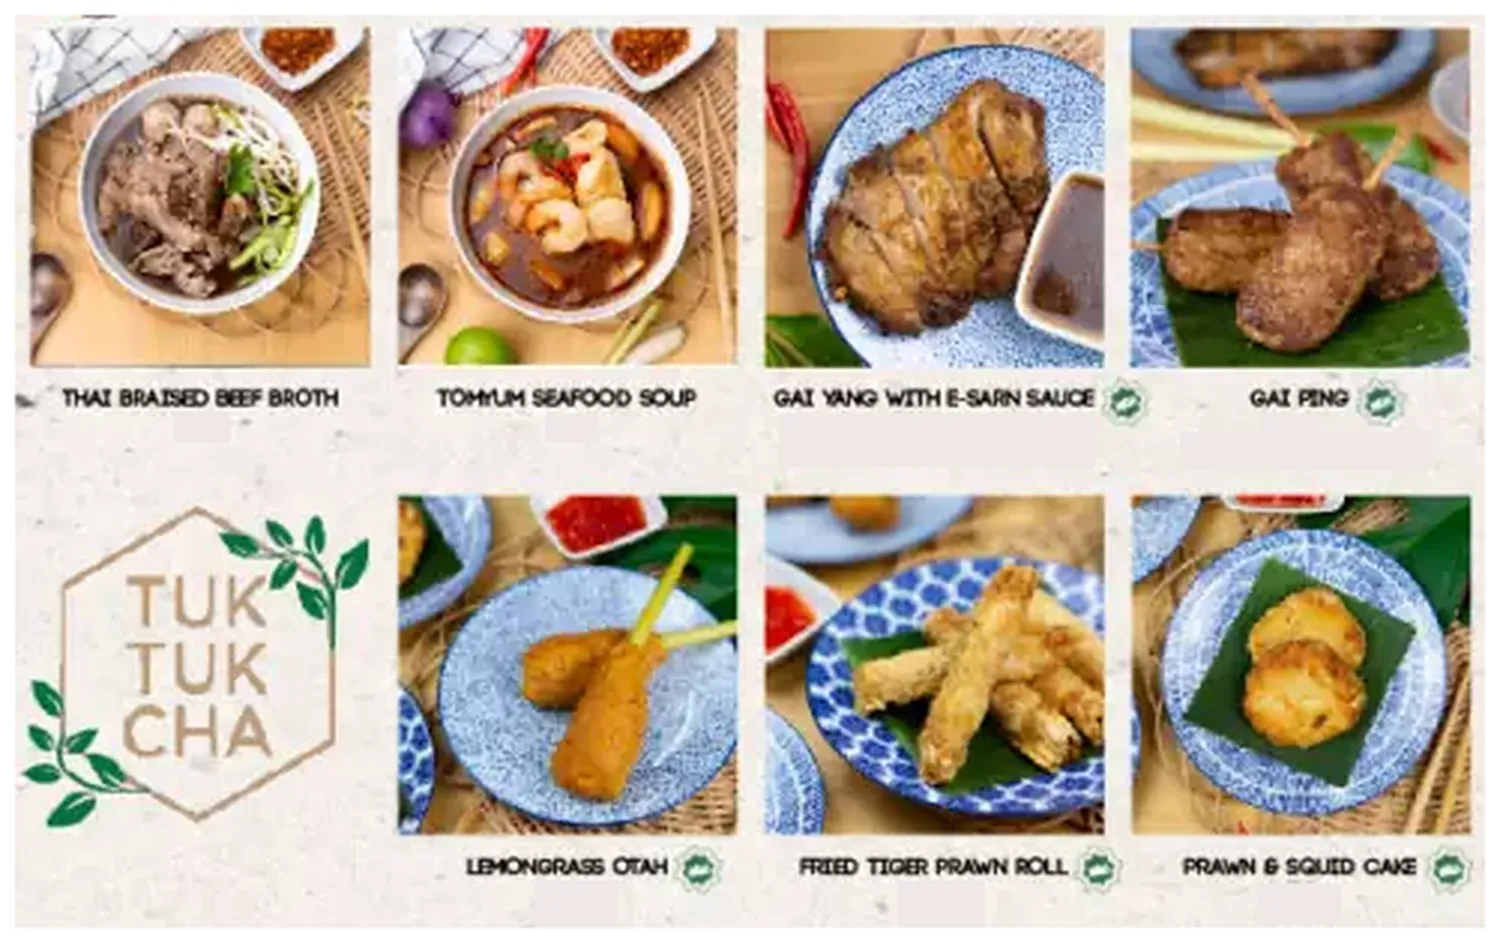 tuk tuk cha menu singapore for sharing